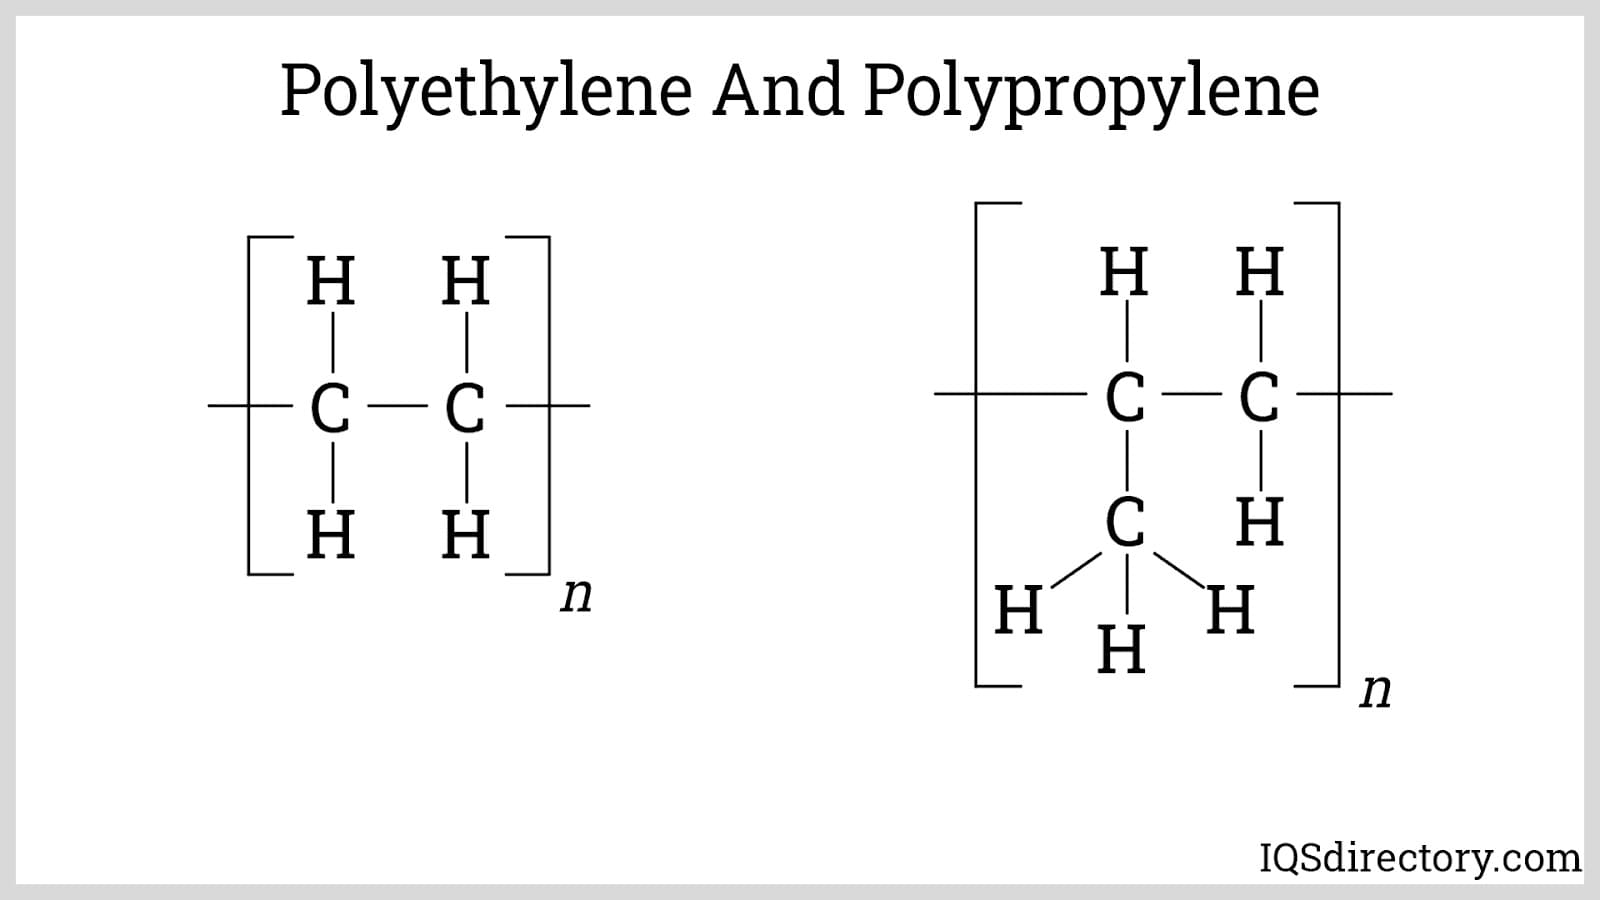 Polyethylene and Polypropylene